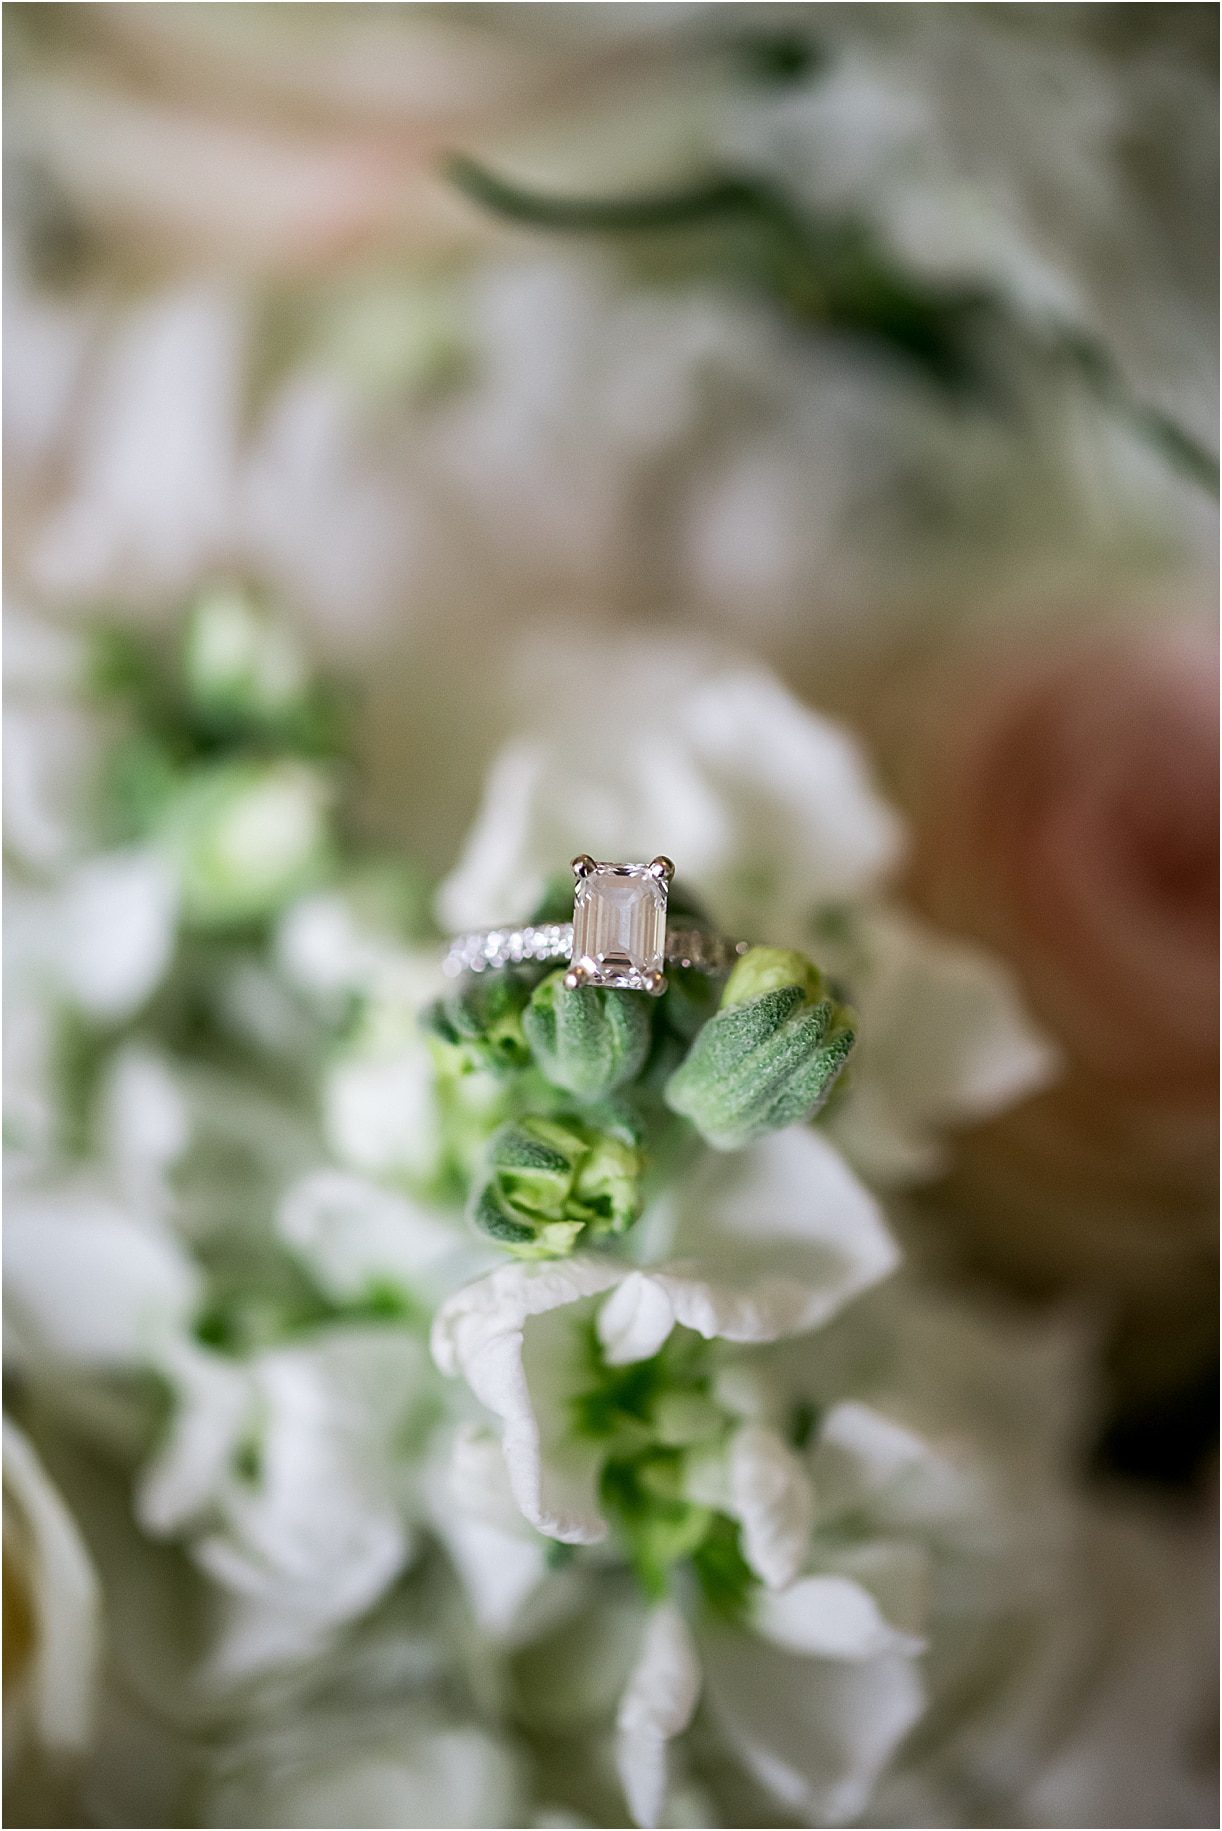 Wedding Rings | Emerald Cut Diamond | Drive In Wedding Ideas | COVID Wedding Ceremony Ideas | Hill City Bride Virginia Weddings